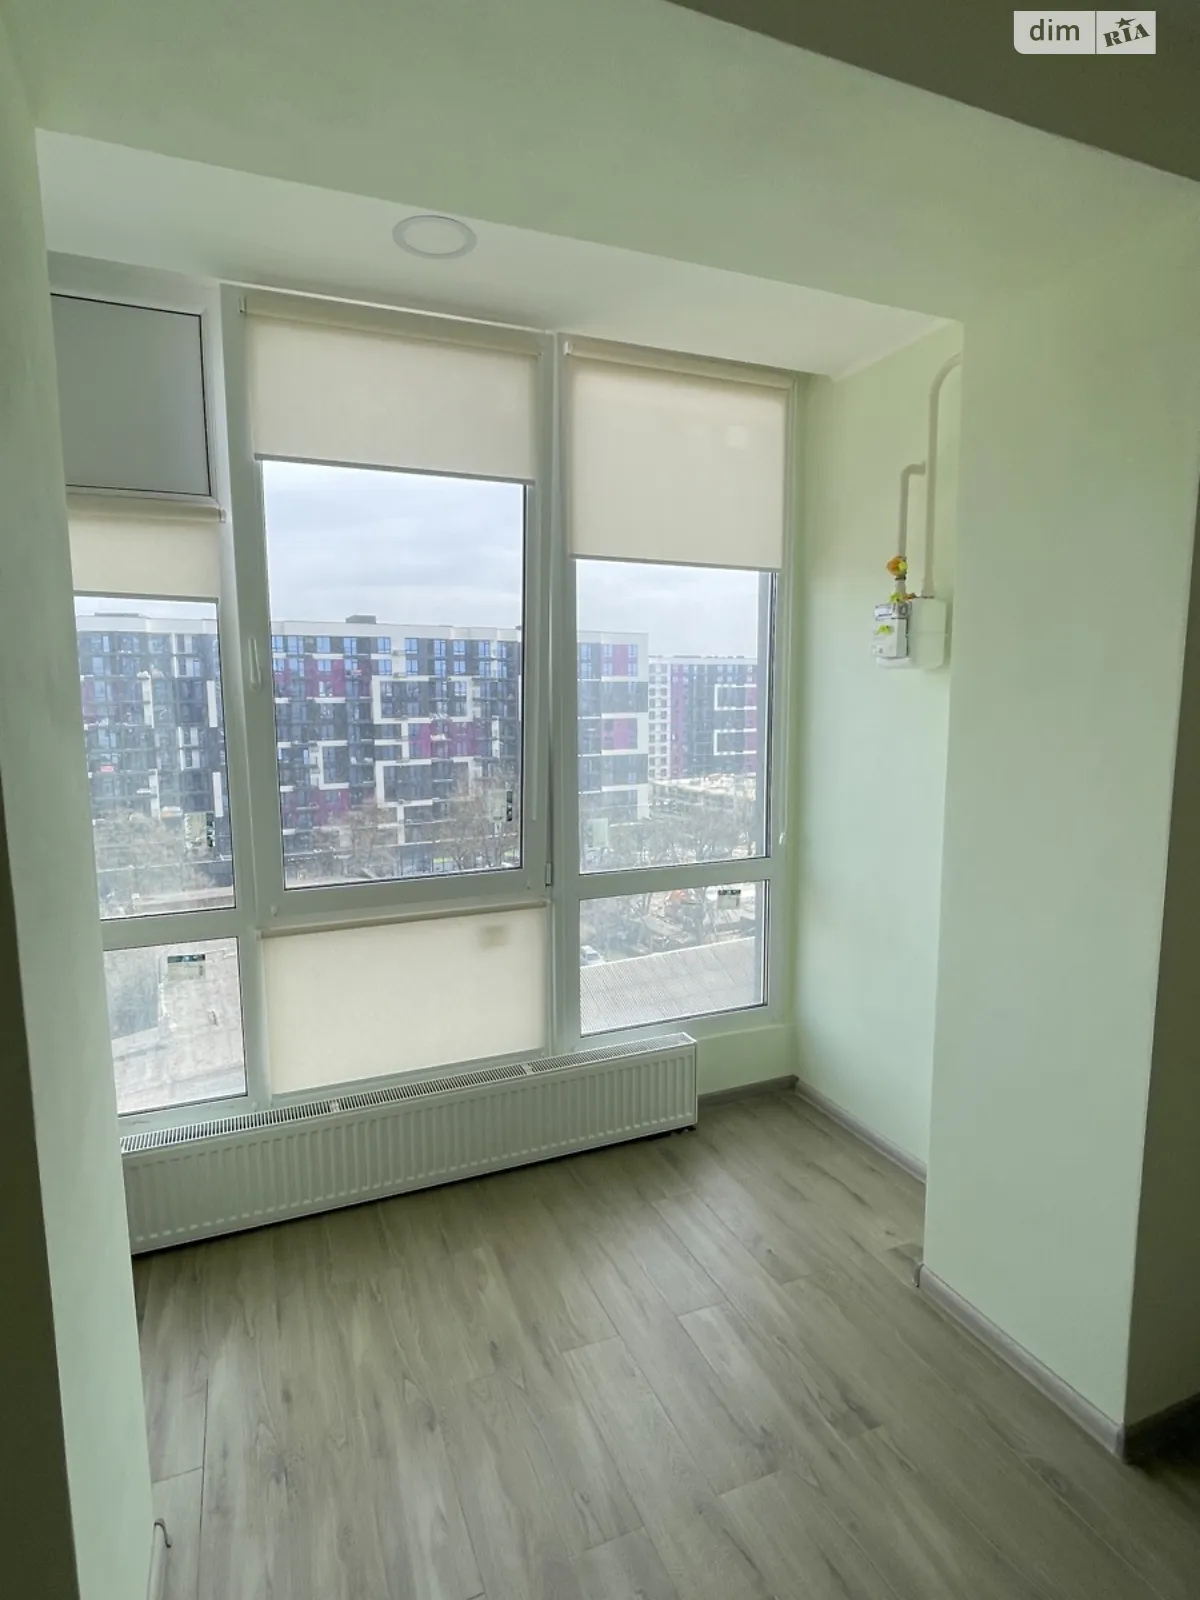 Продается 1-комнатная квартира 44.4 кв. м в Ивано-Франковске - фото 4